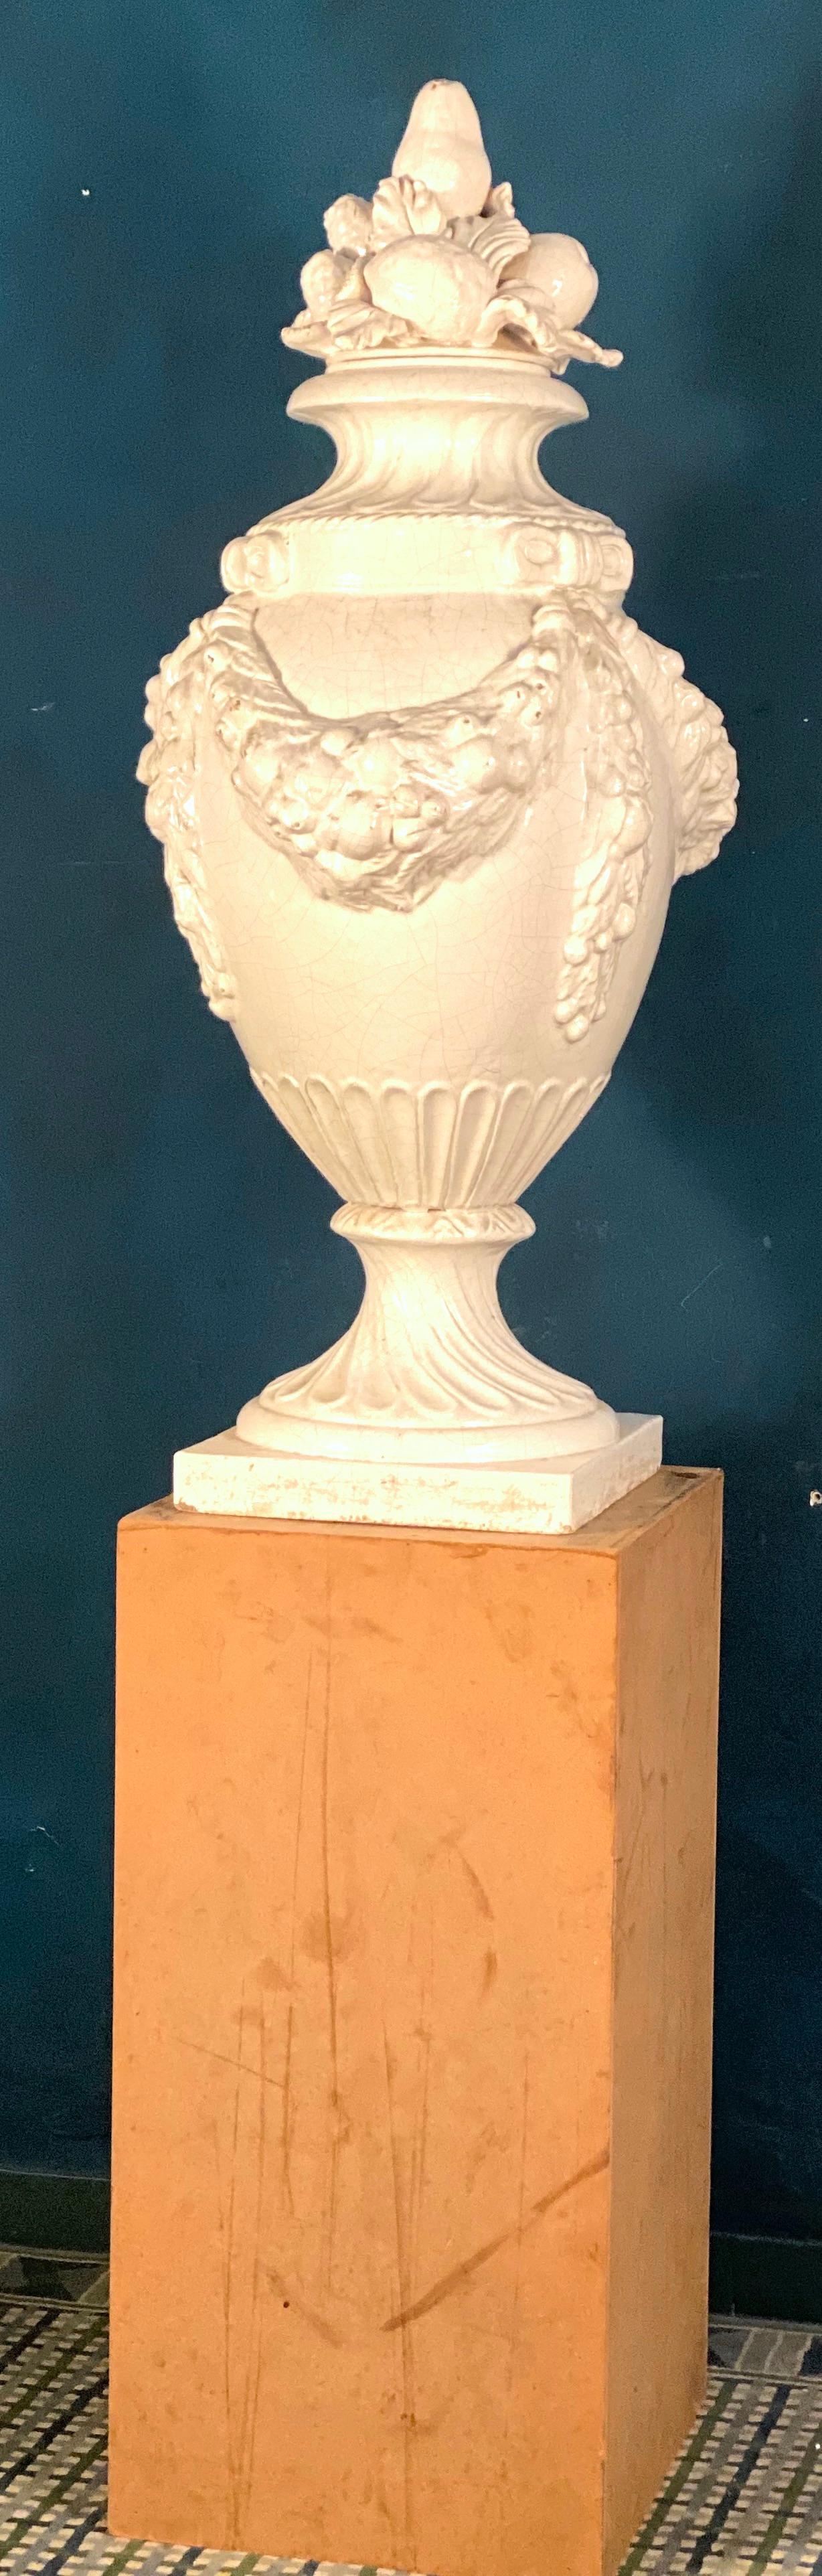 Pair of Large Italian White Ceramic Urn Vases For Sale 6